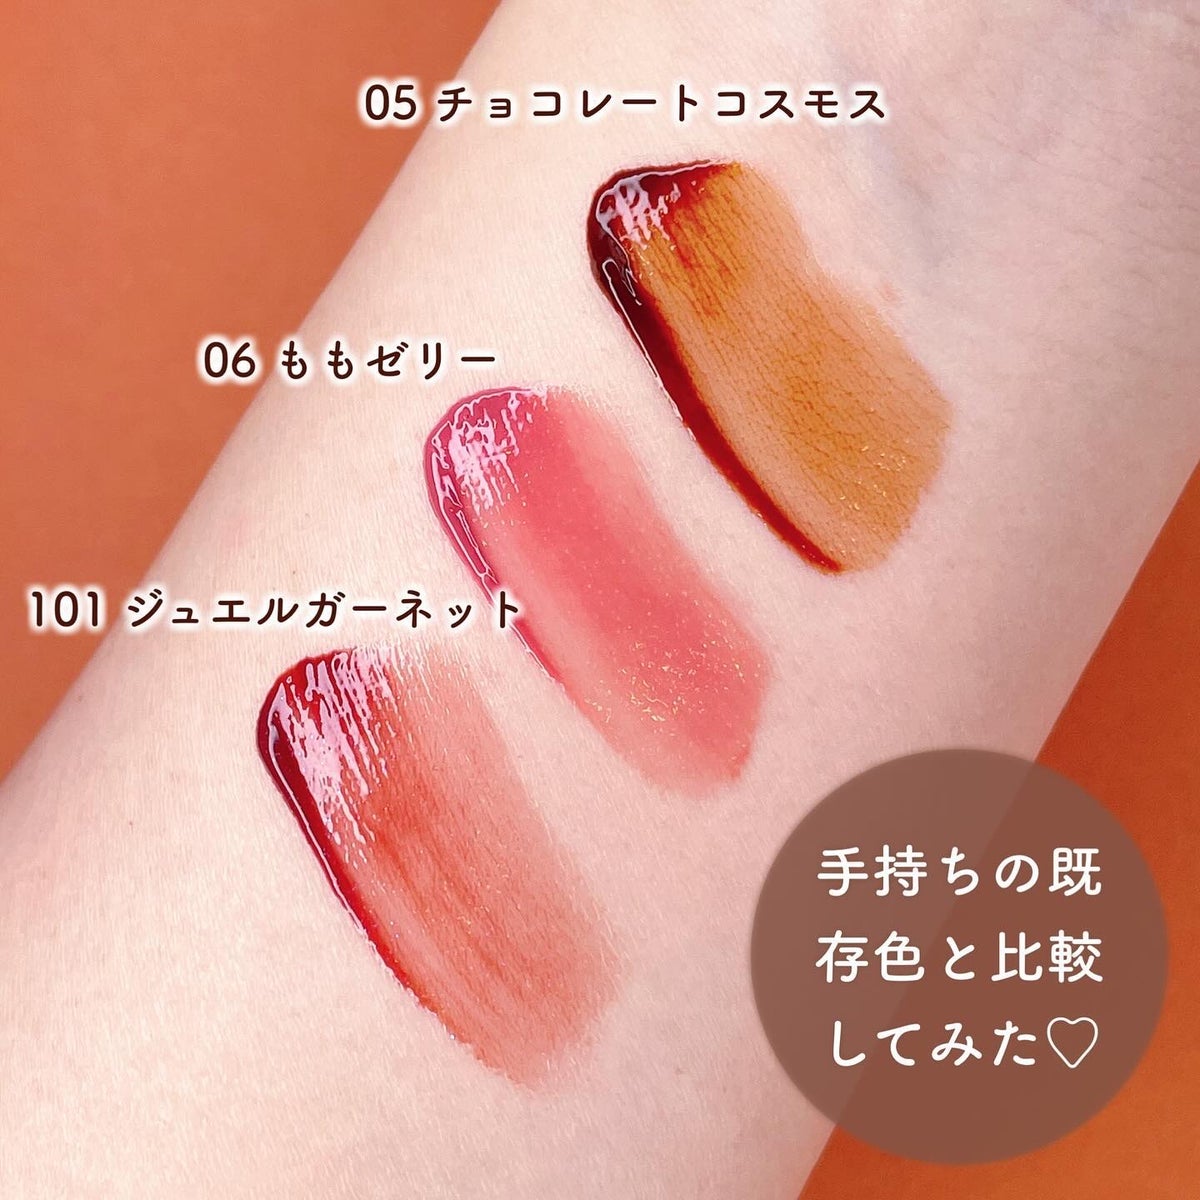 Melty flower lip tint/haomii/口紅を使ったクチコミ（4枚目）